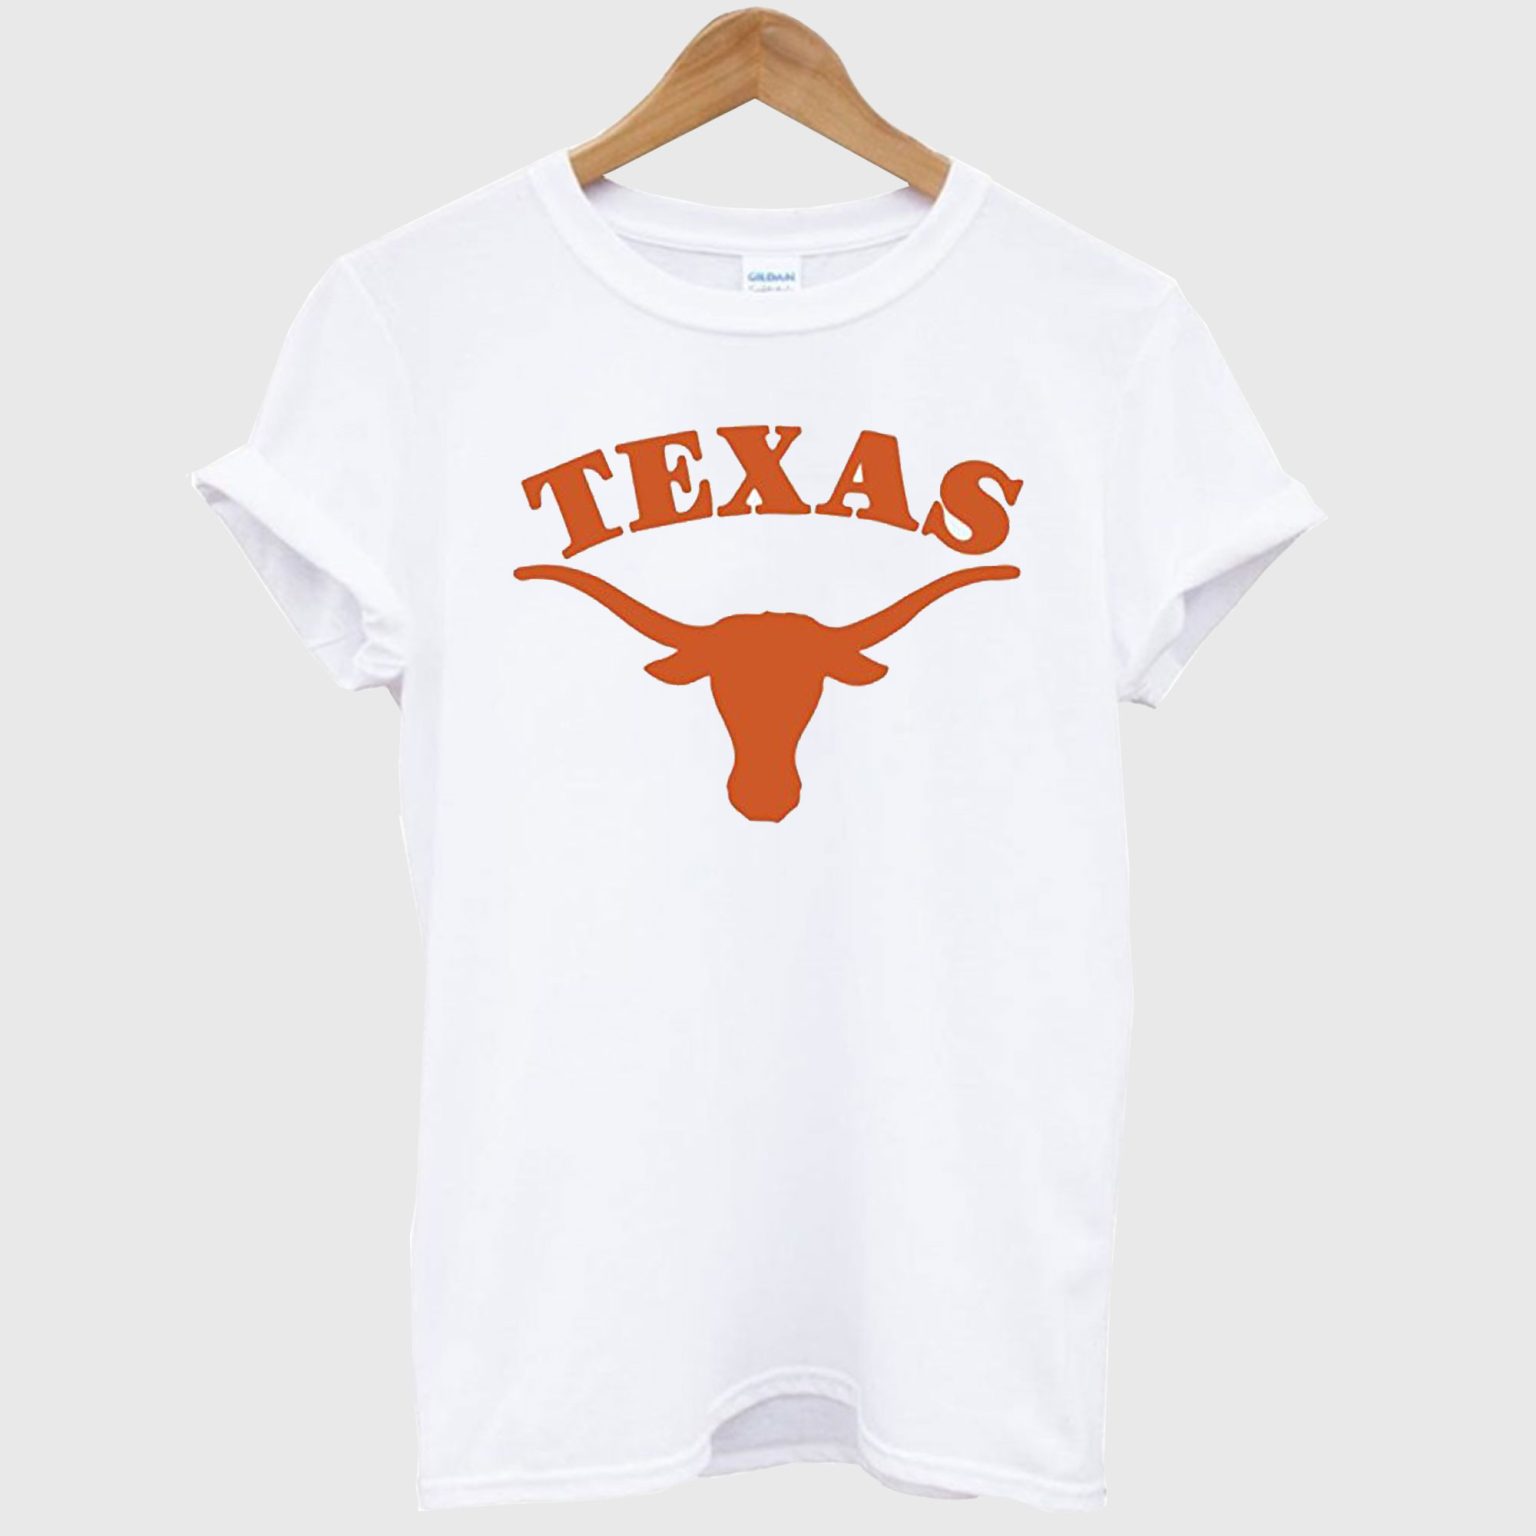 The University of Texas T Shirt